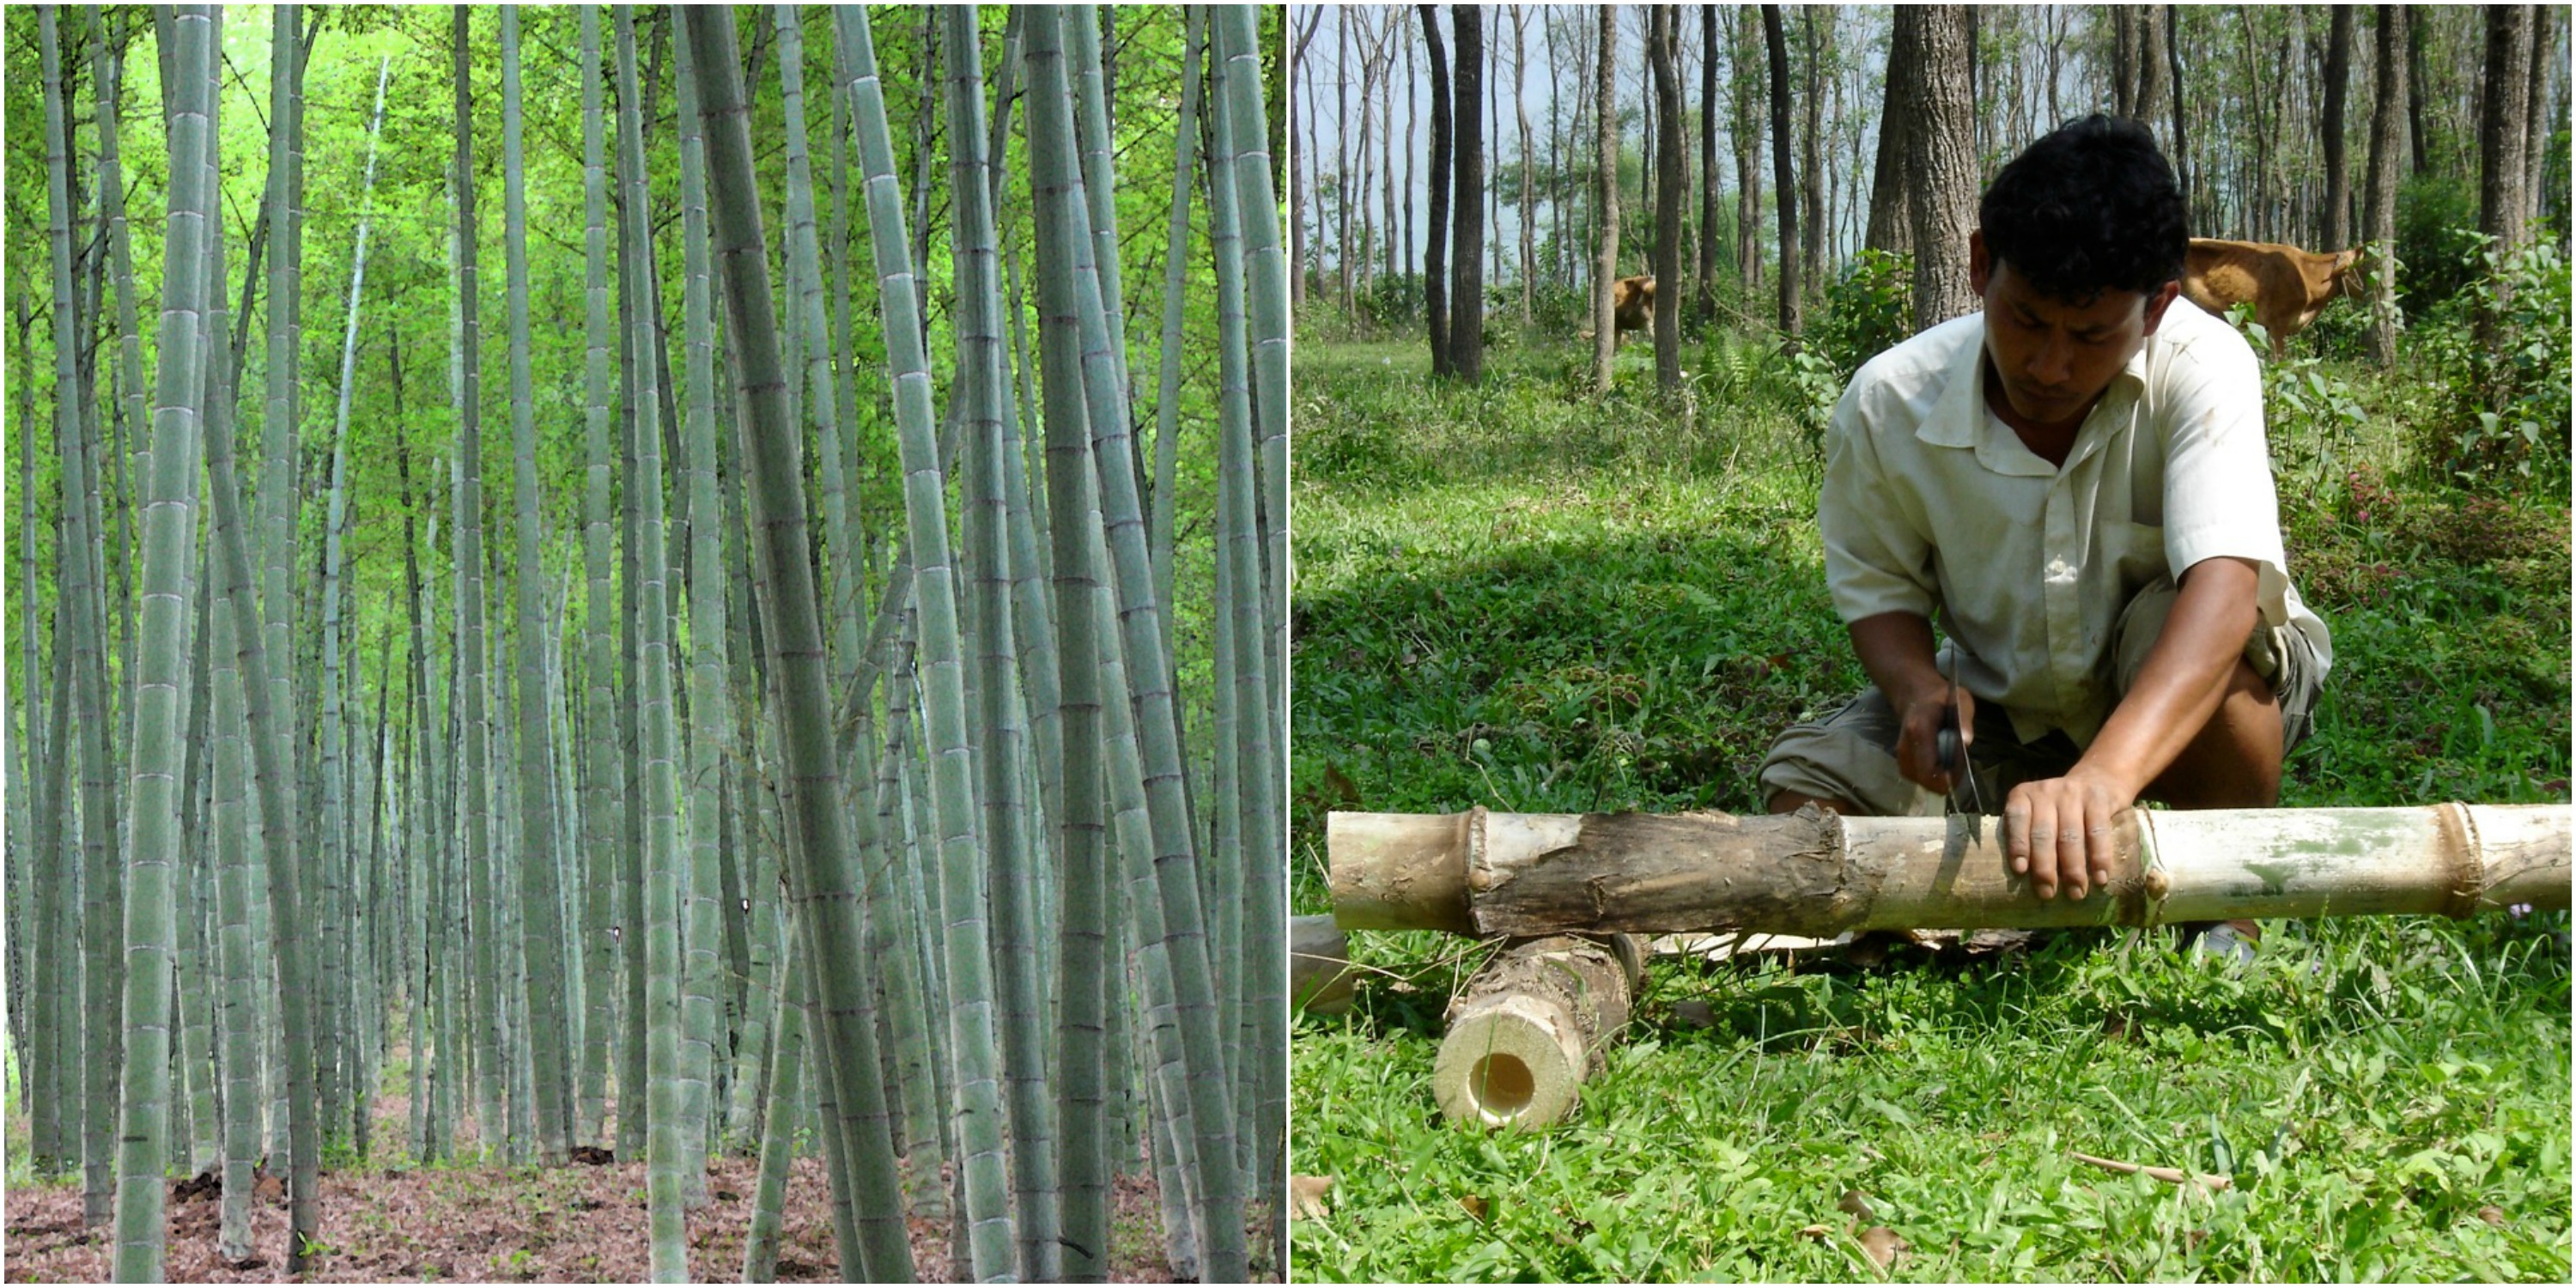 Harvesting Bamboo